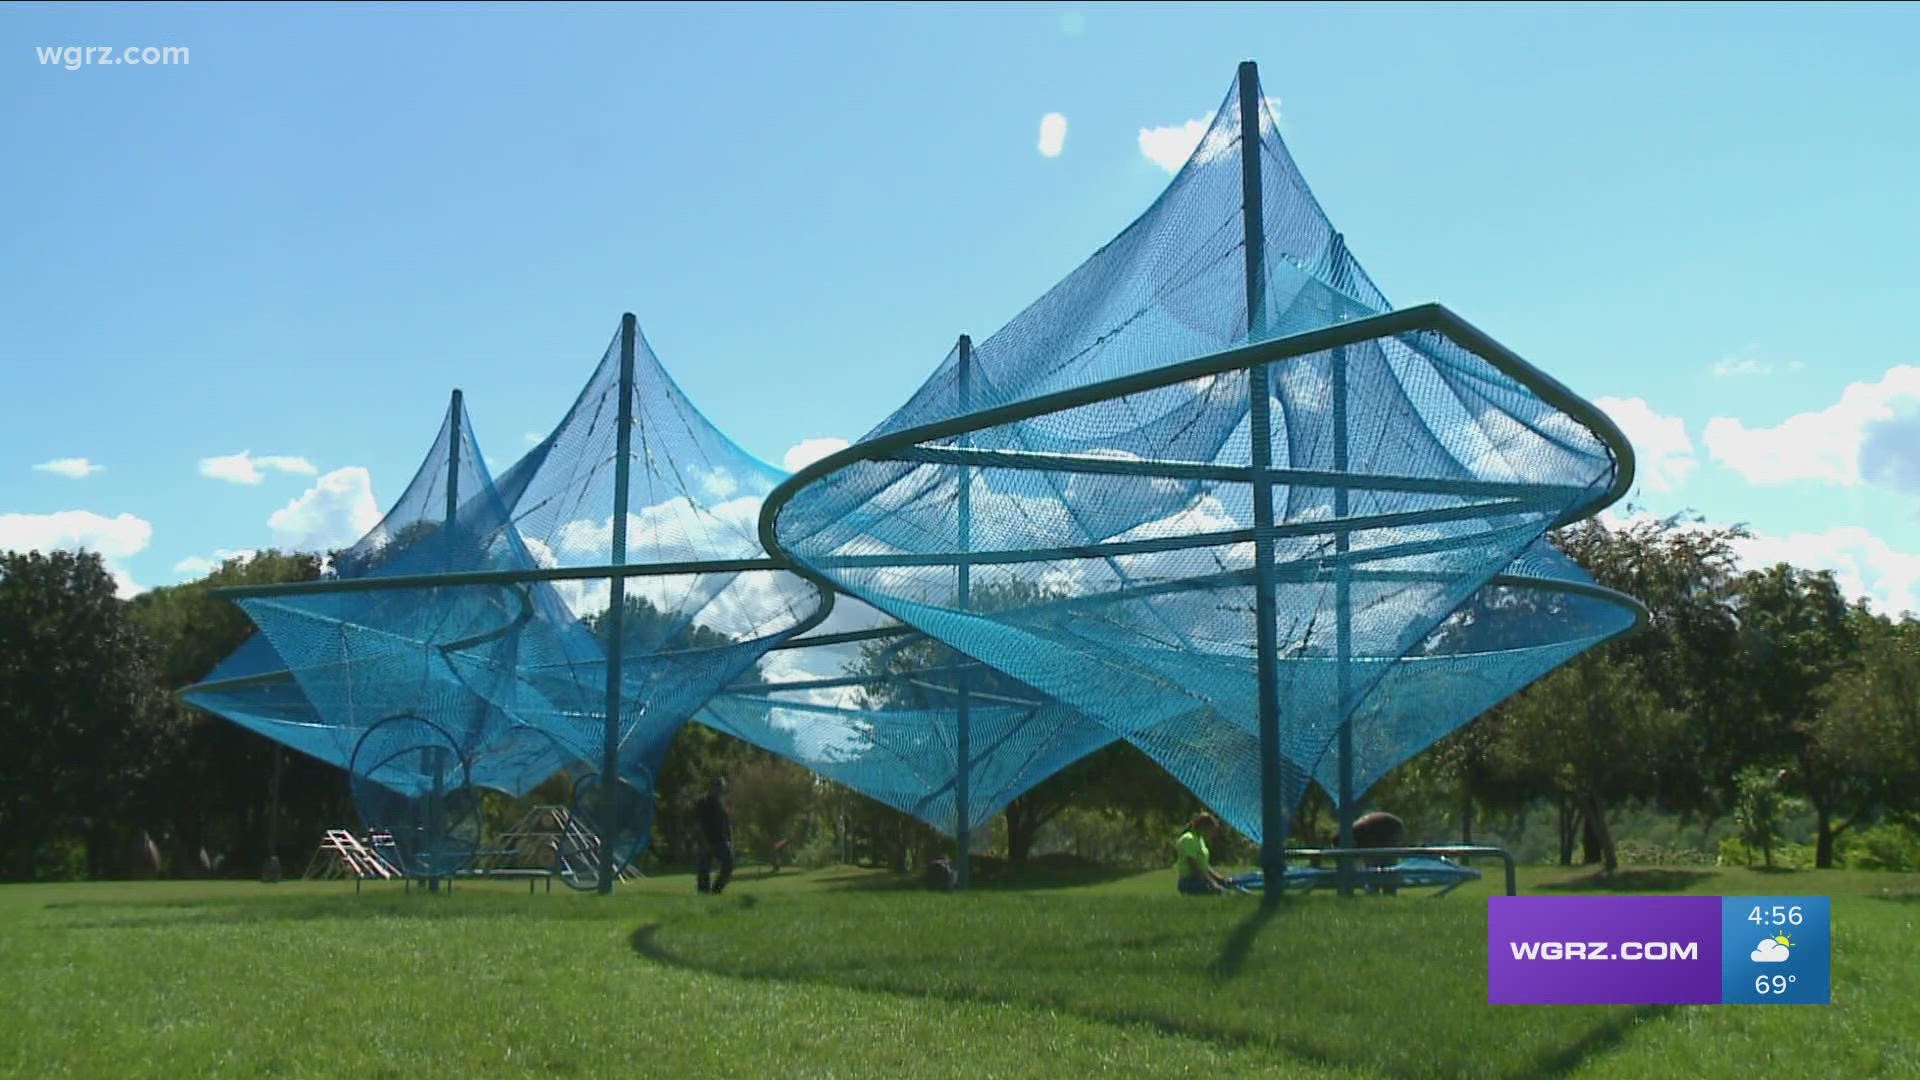 Most Buffalo: 'Artpark 2 new immersive art projects'